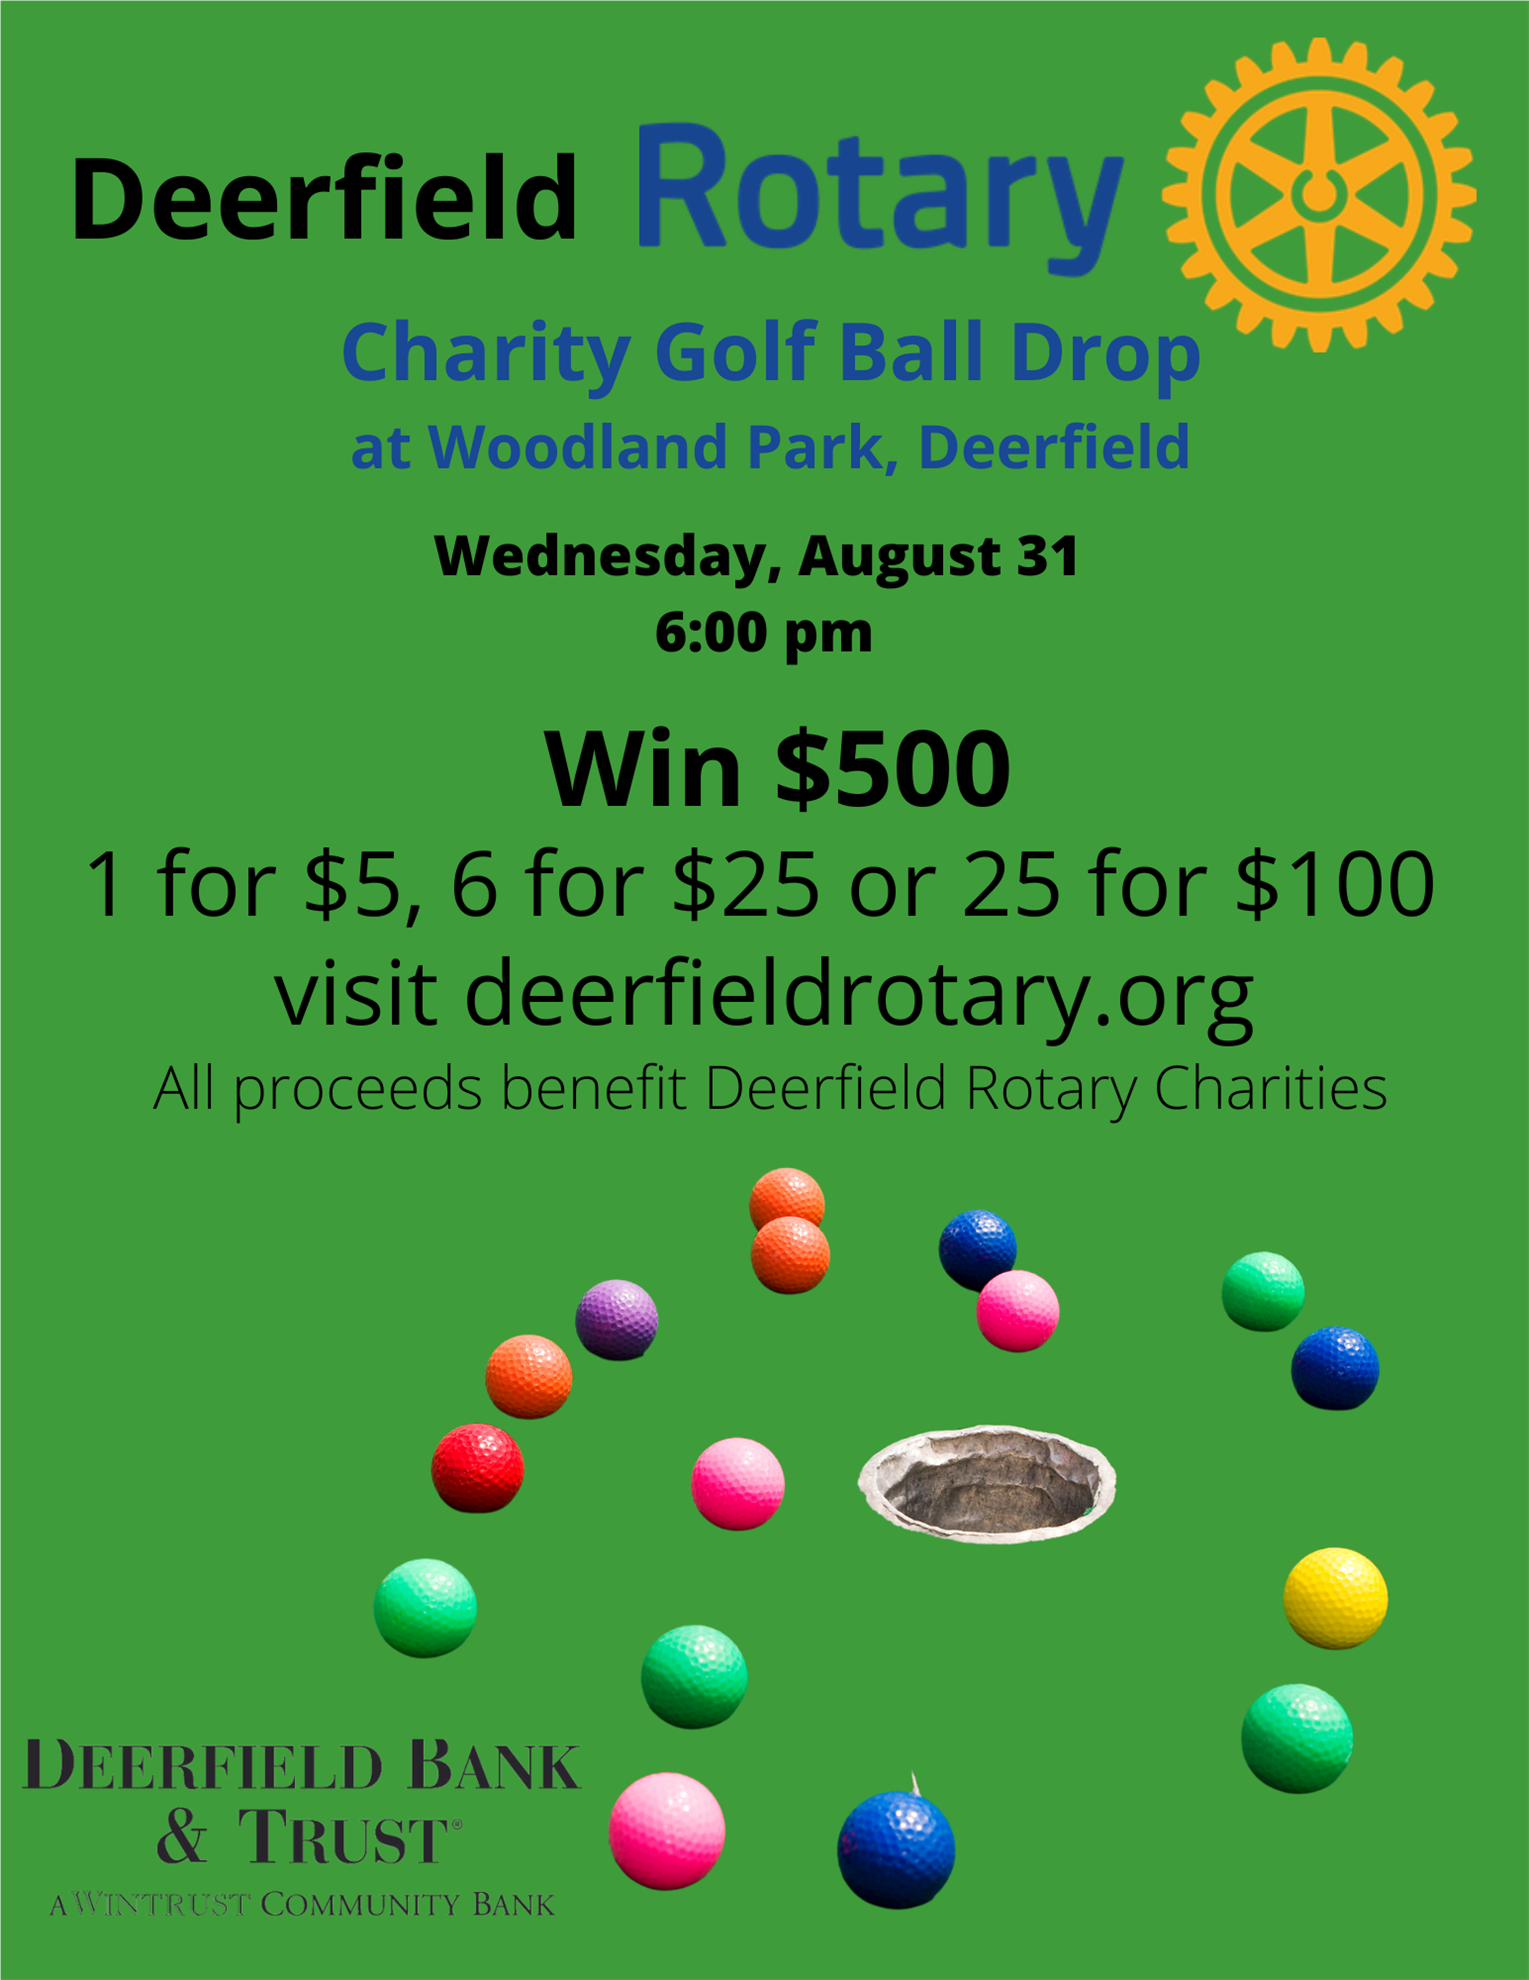 Deerfield Rotary Charity Golf Ball Drop